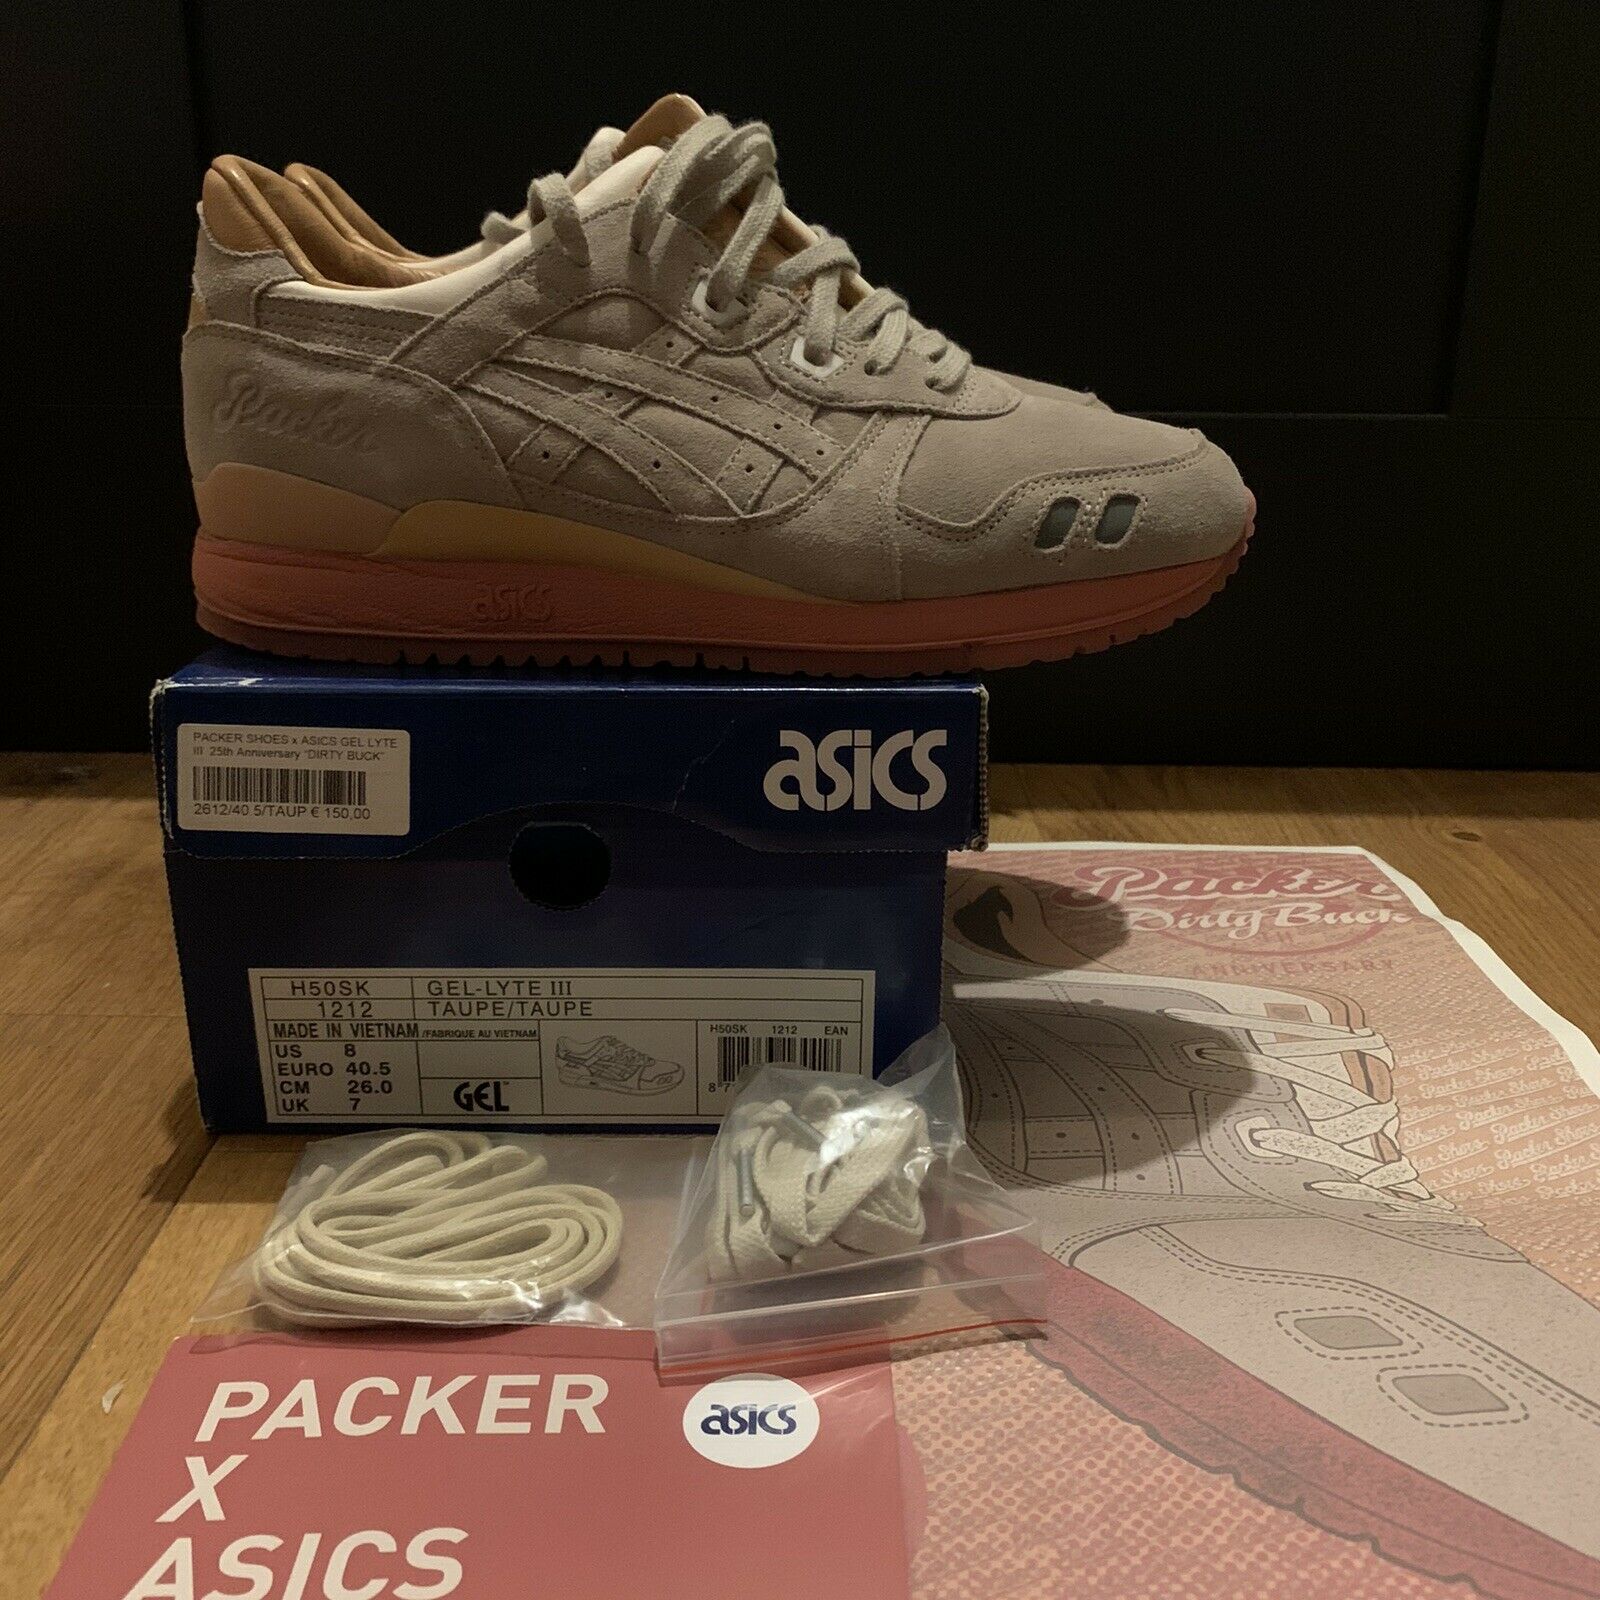 ASICS Gel Lyte III Packer Shoes Dirty Buck Special Box